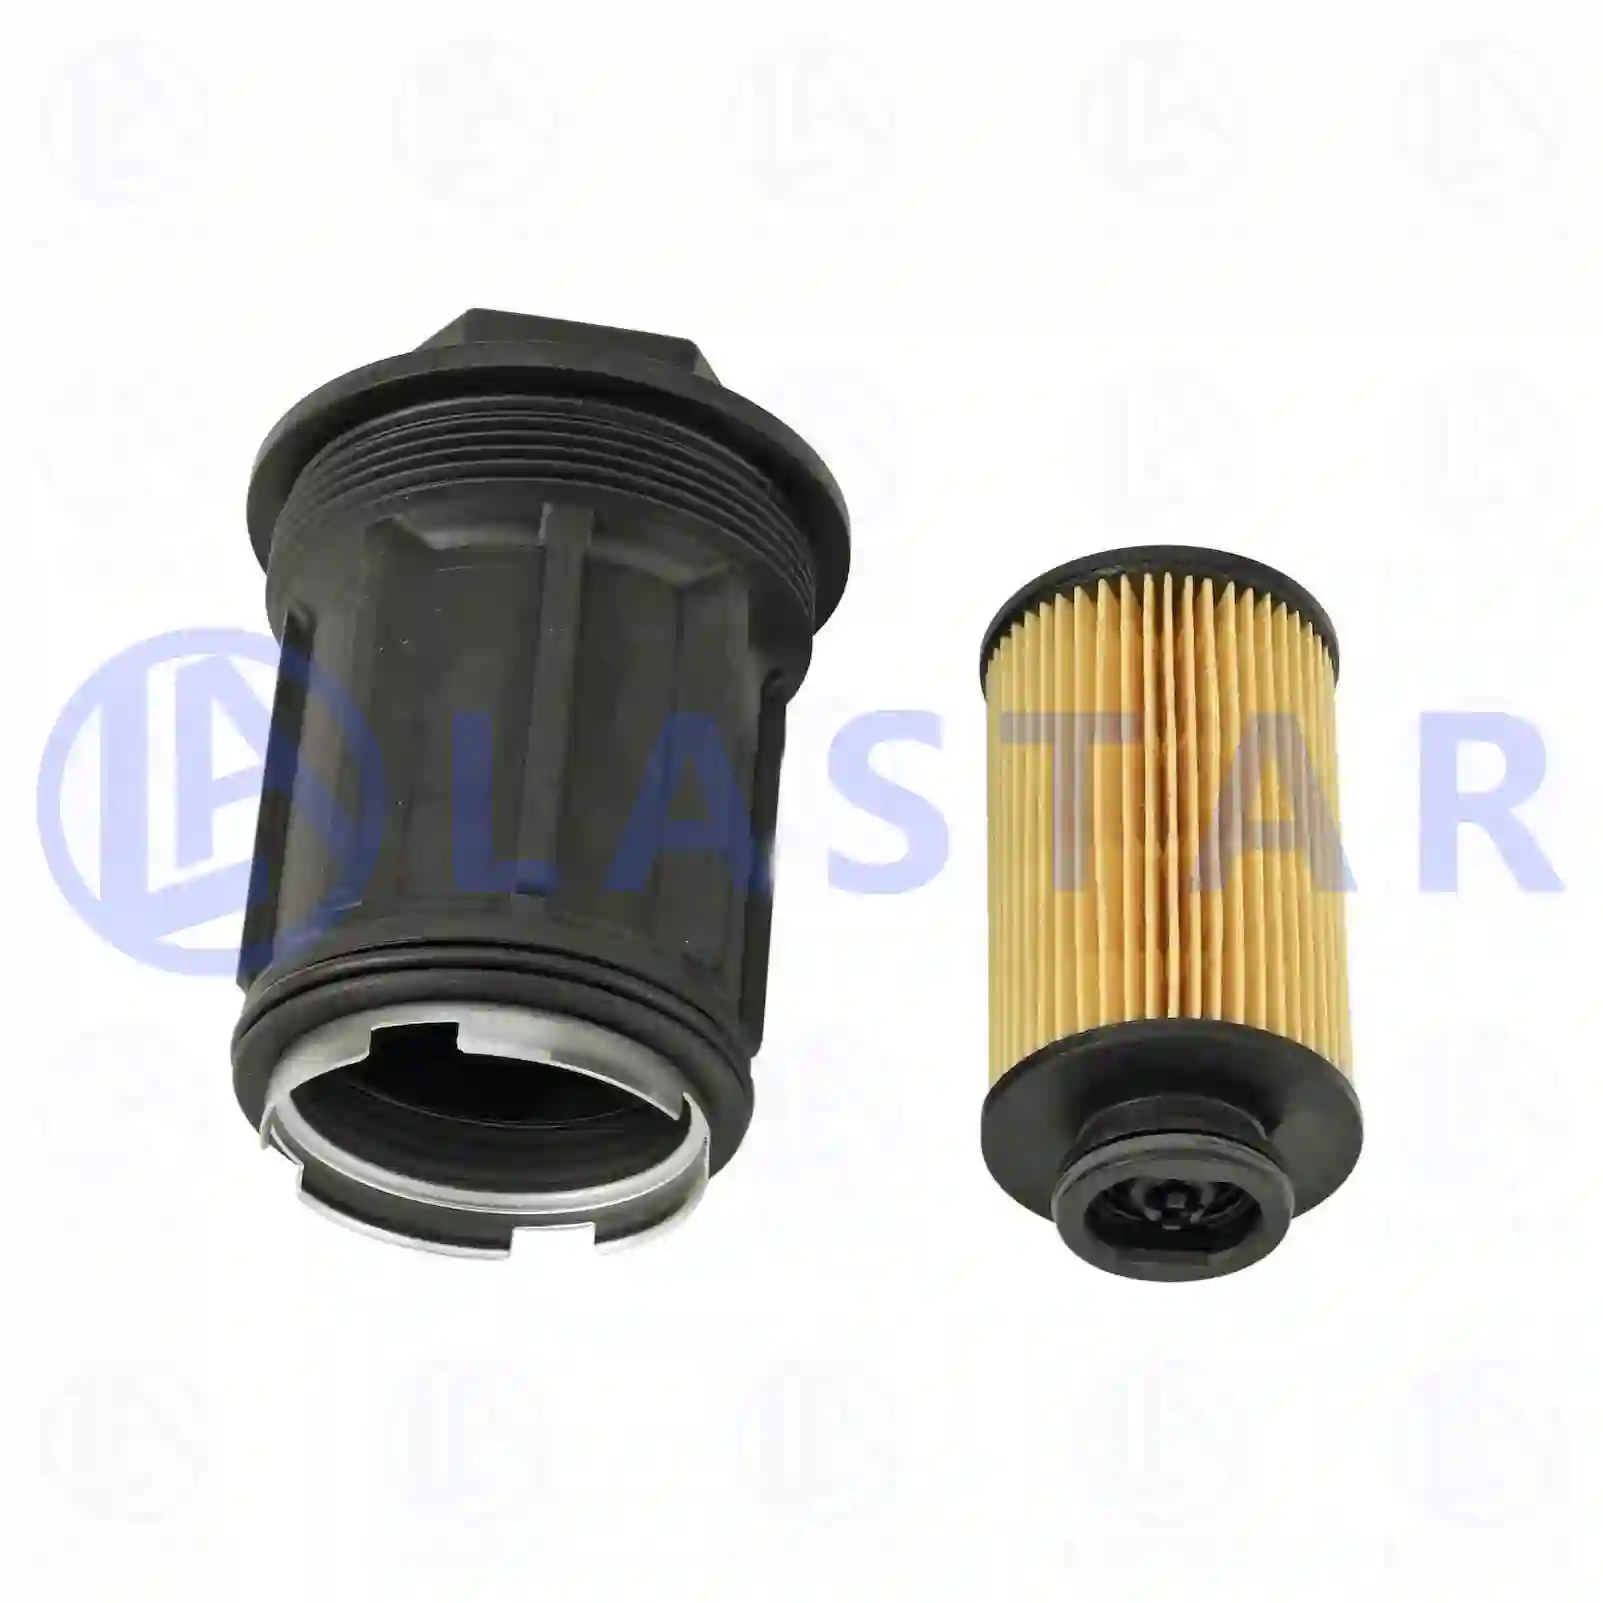  Urea filter insert || Lastar Spare Part | Truck Spare Parts, Auotomotive Spare Parts